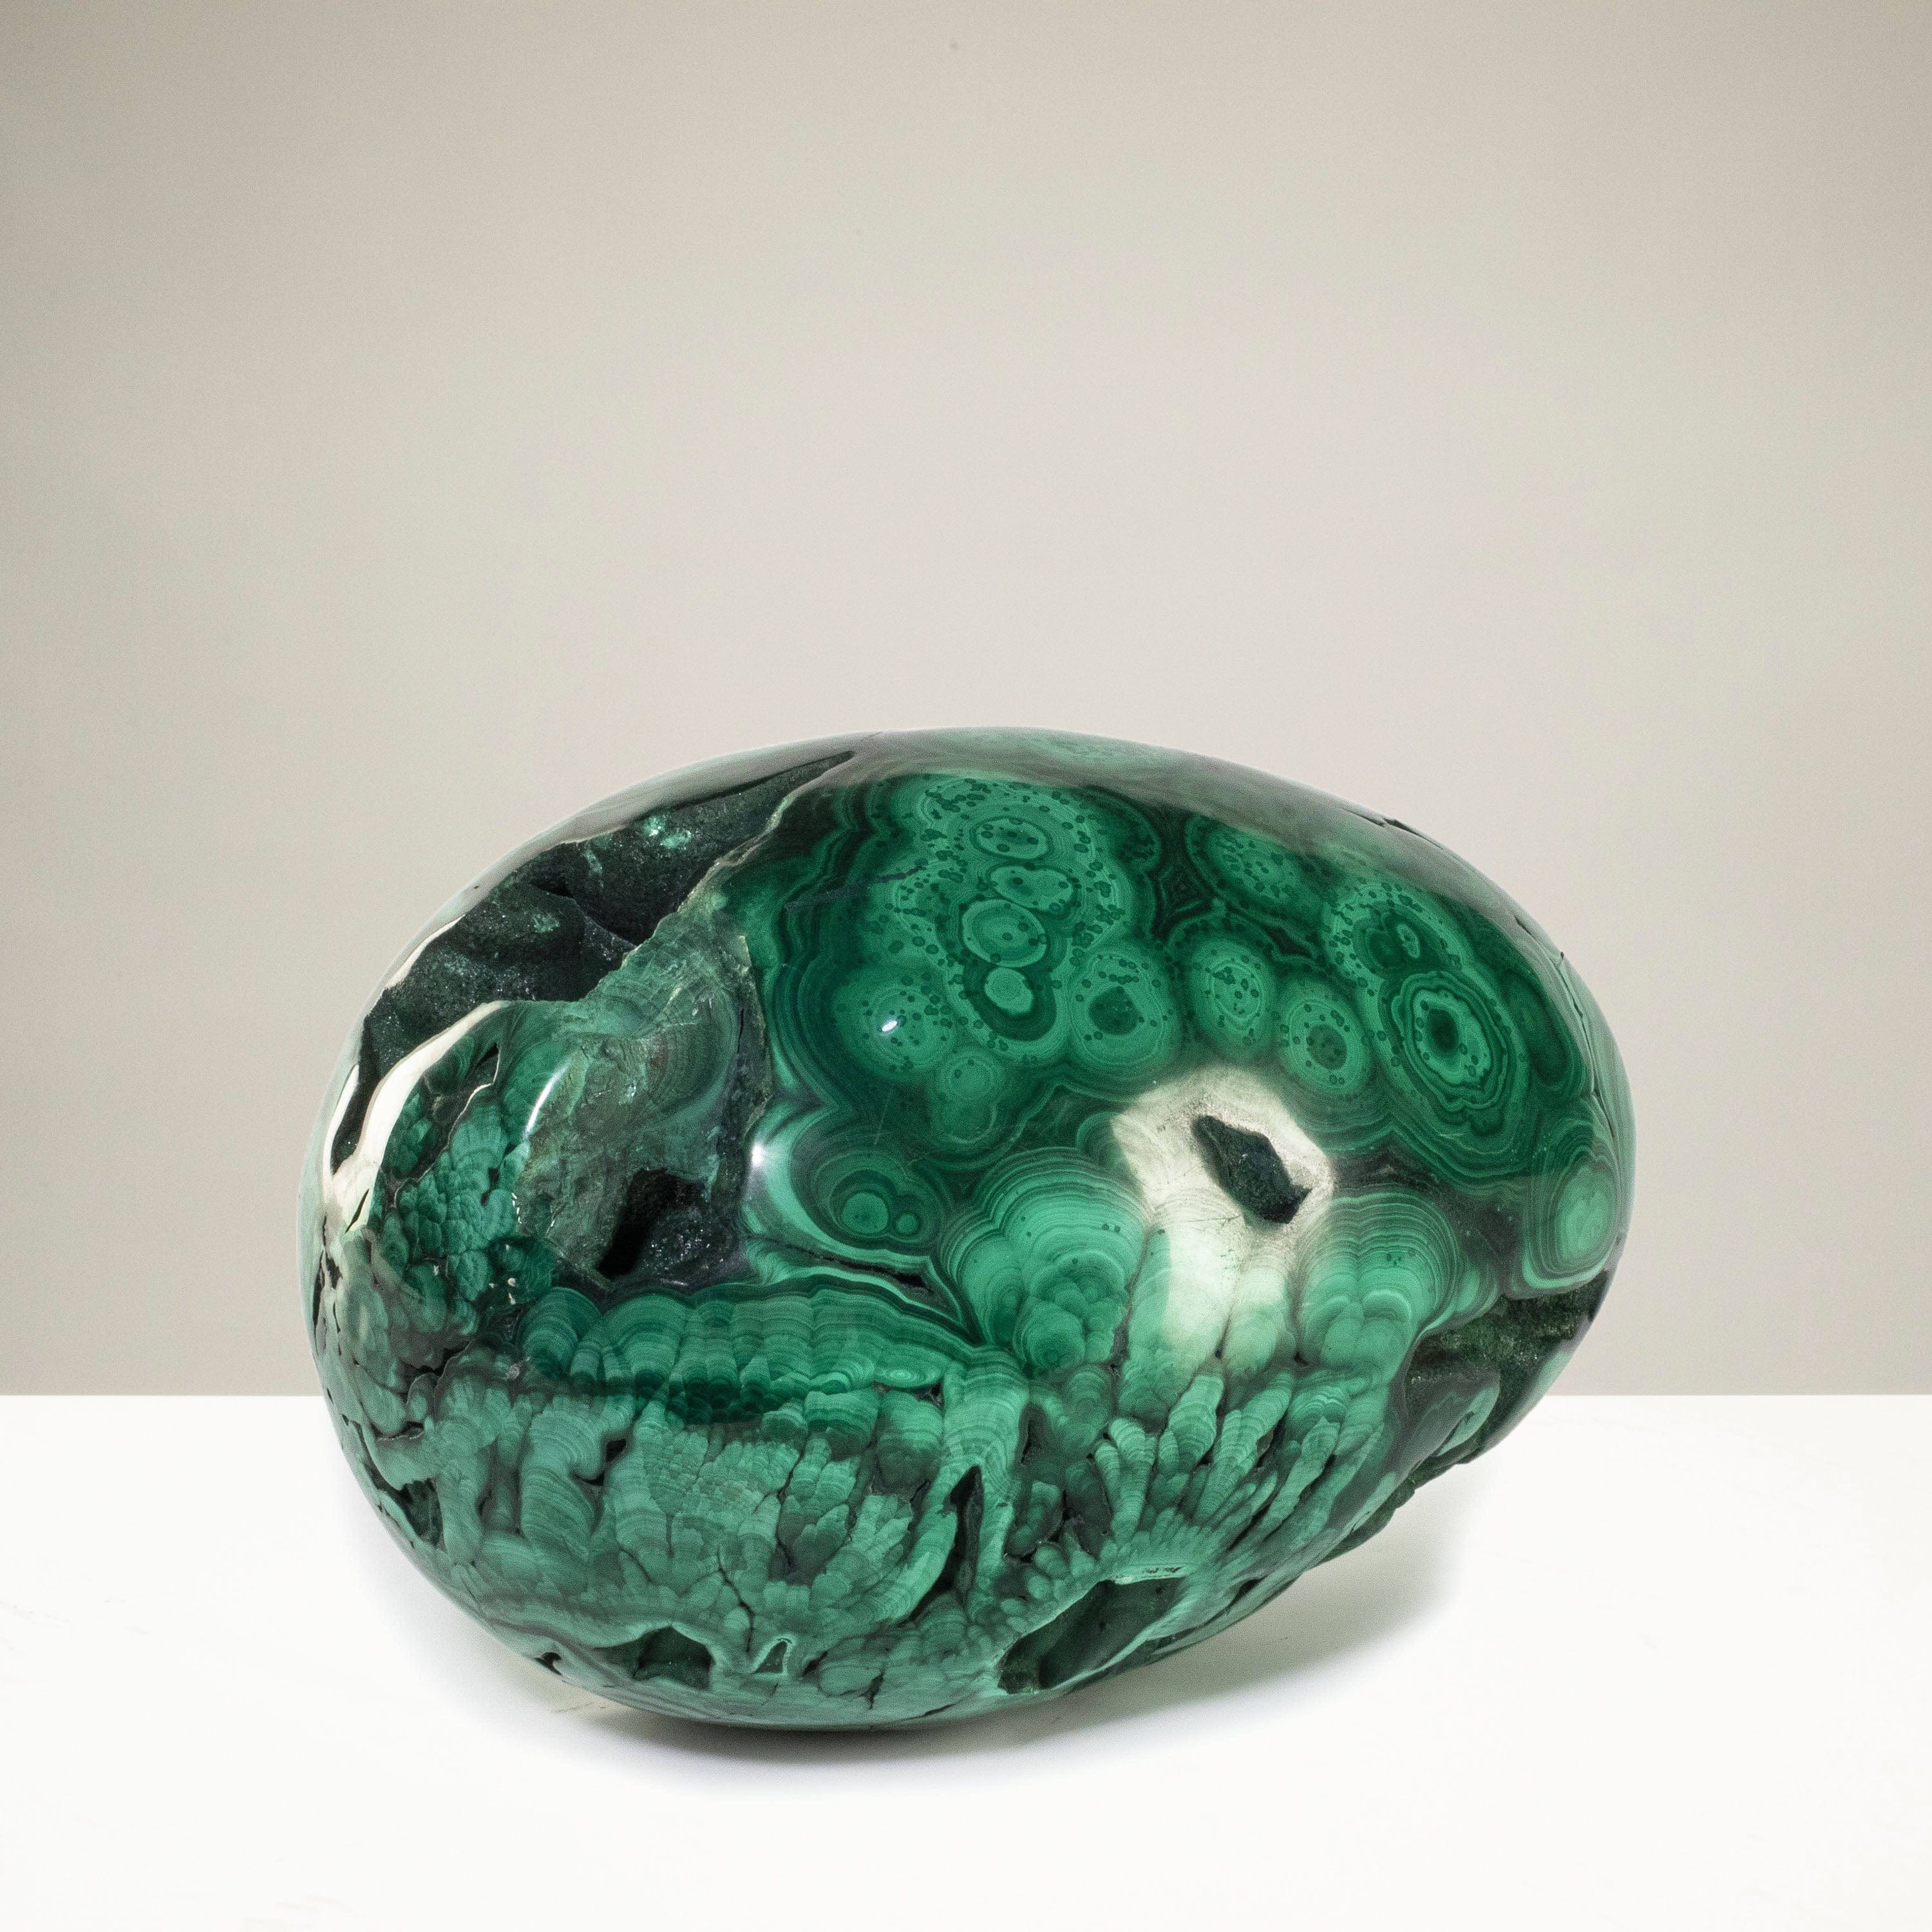 Kalifano Malachite Rare Natural Green Malachite Egg Carving from Congo - 7.5 in / 12.6 lbs MA14000.002